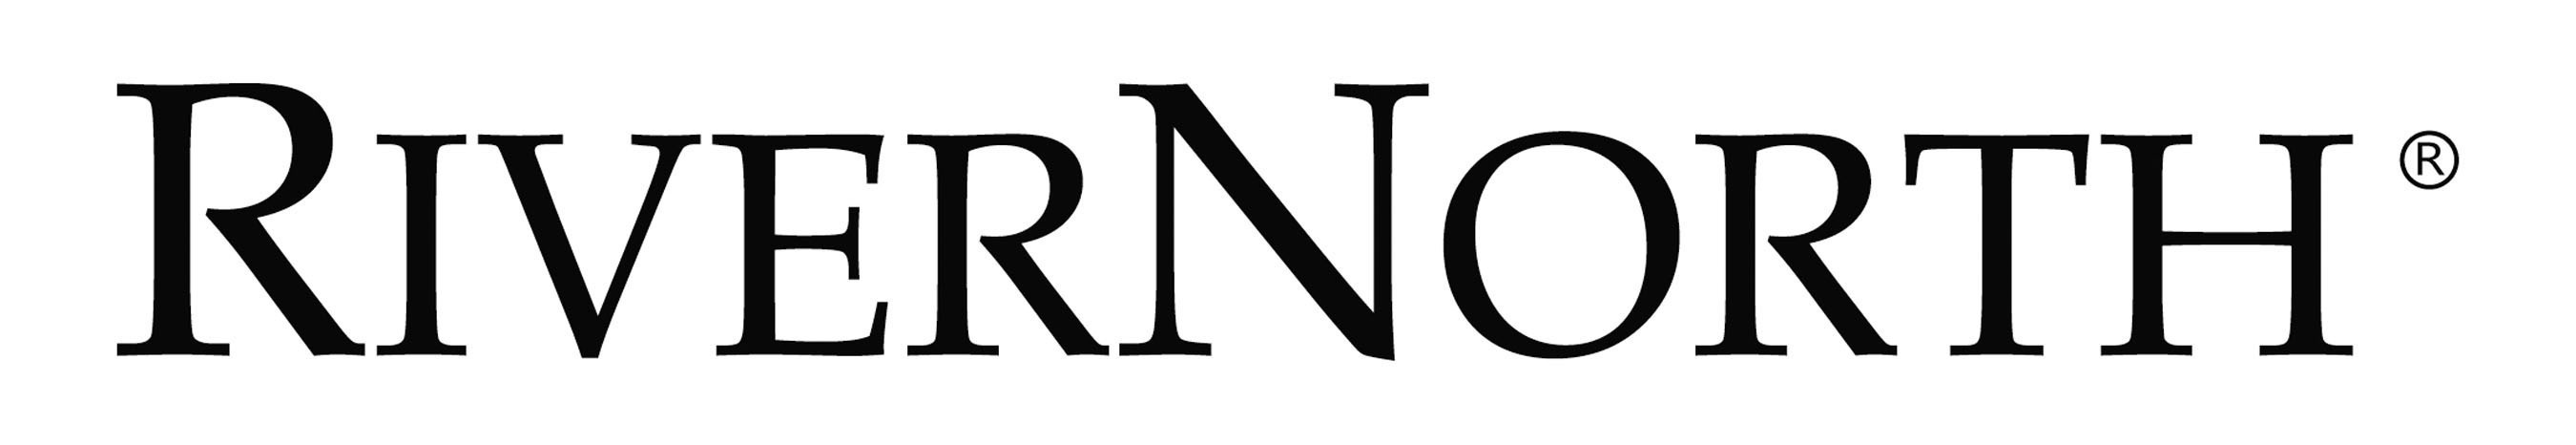 RiverNorth Logo.